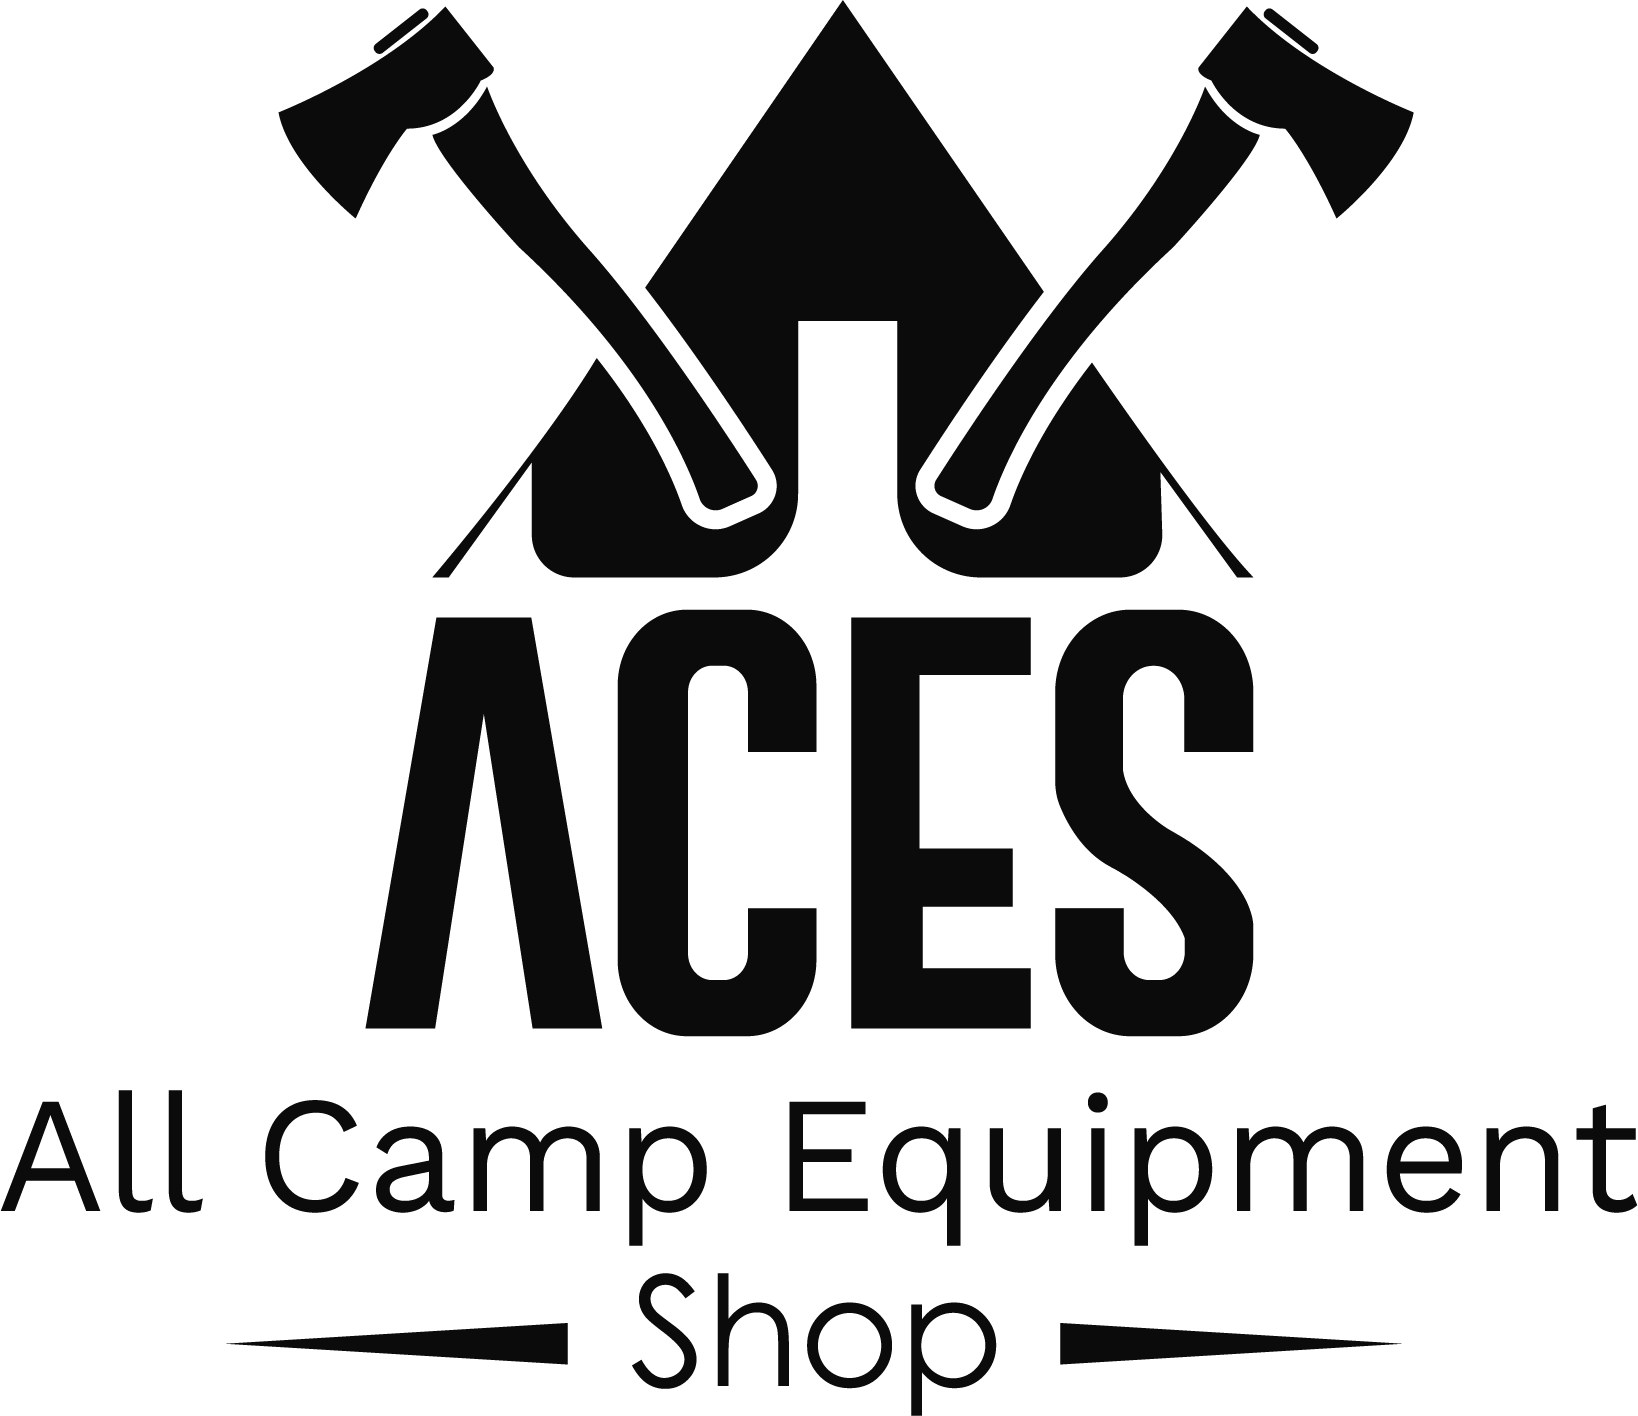 All Camp Equipment Shop